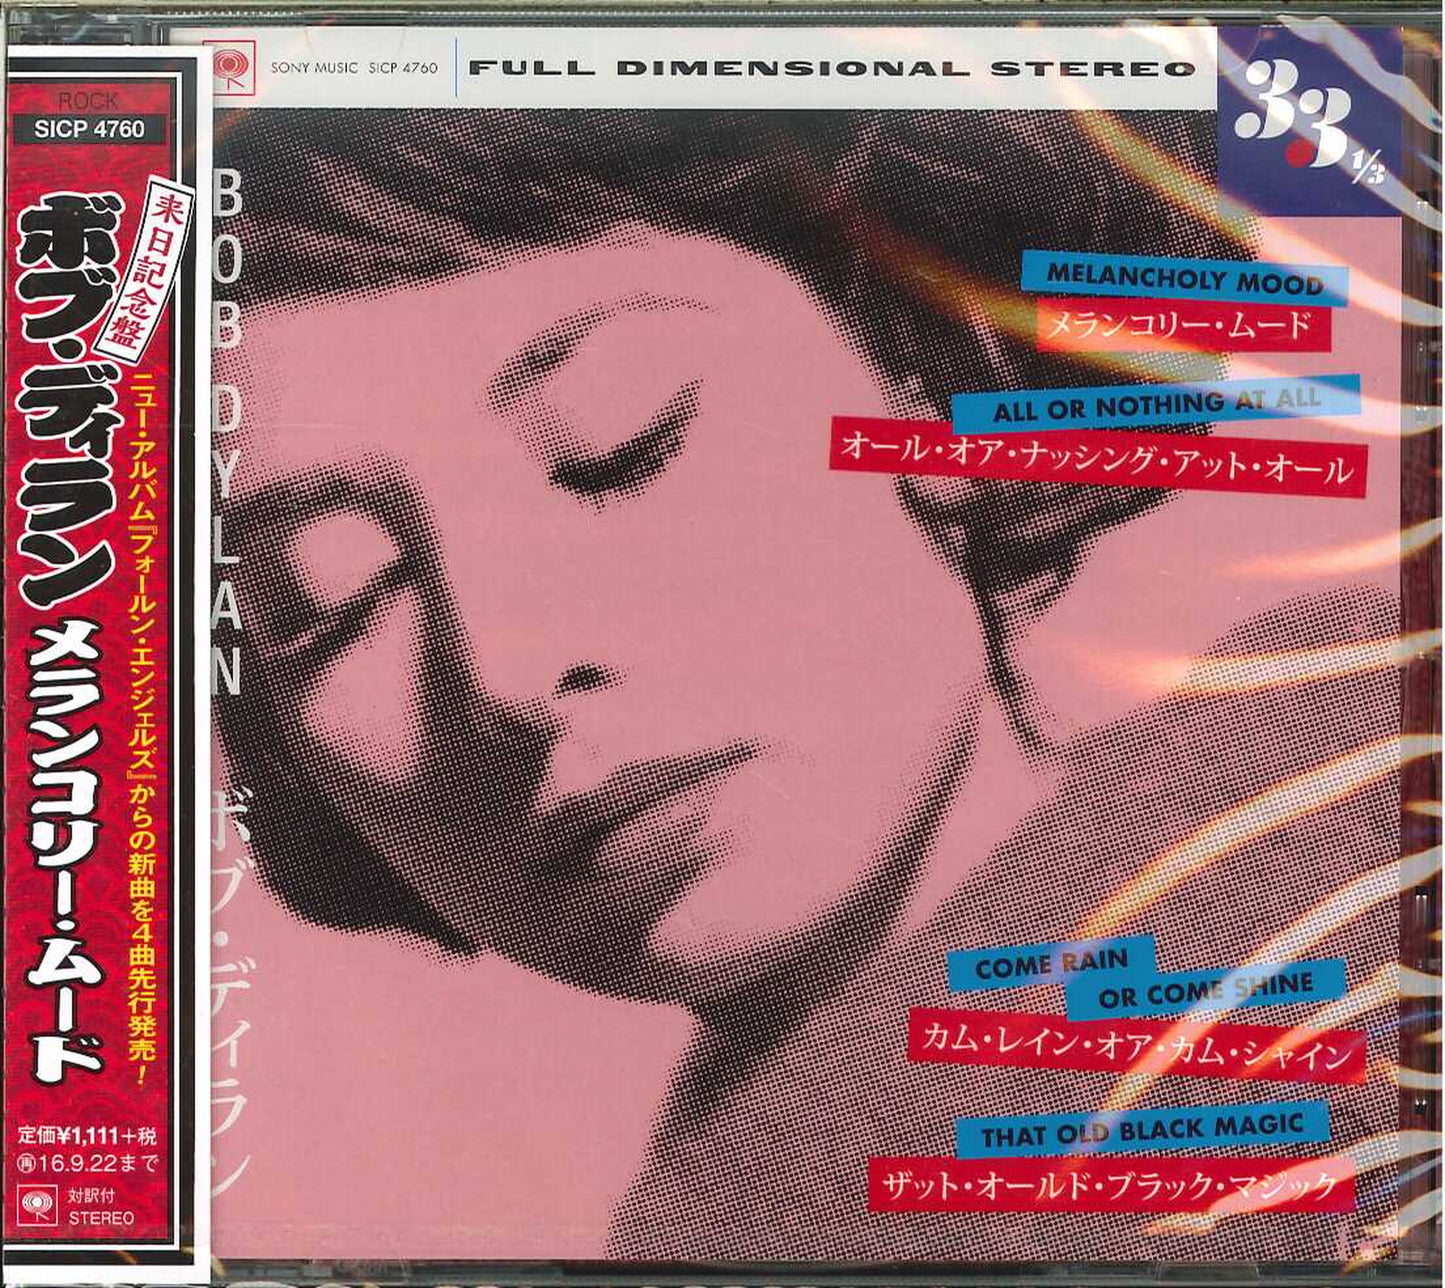 Bob Dylan - Melancholy Mood - Japan CD